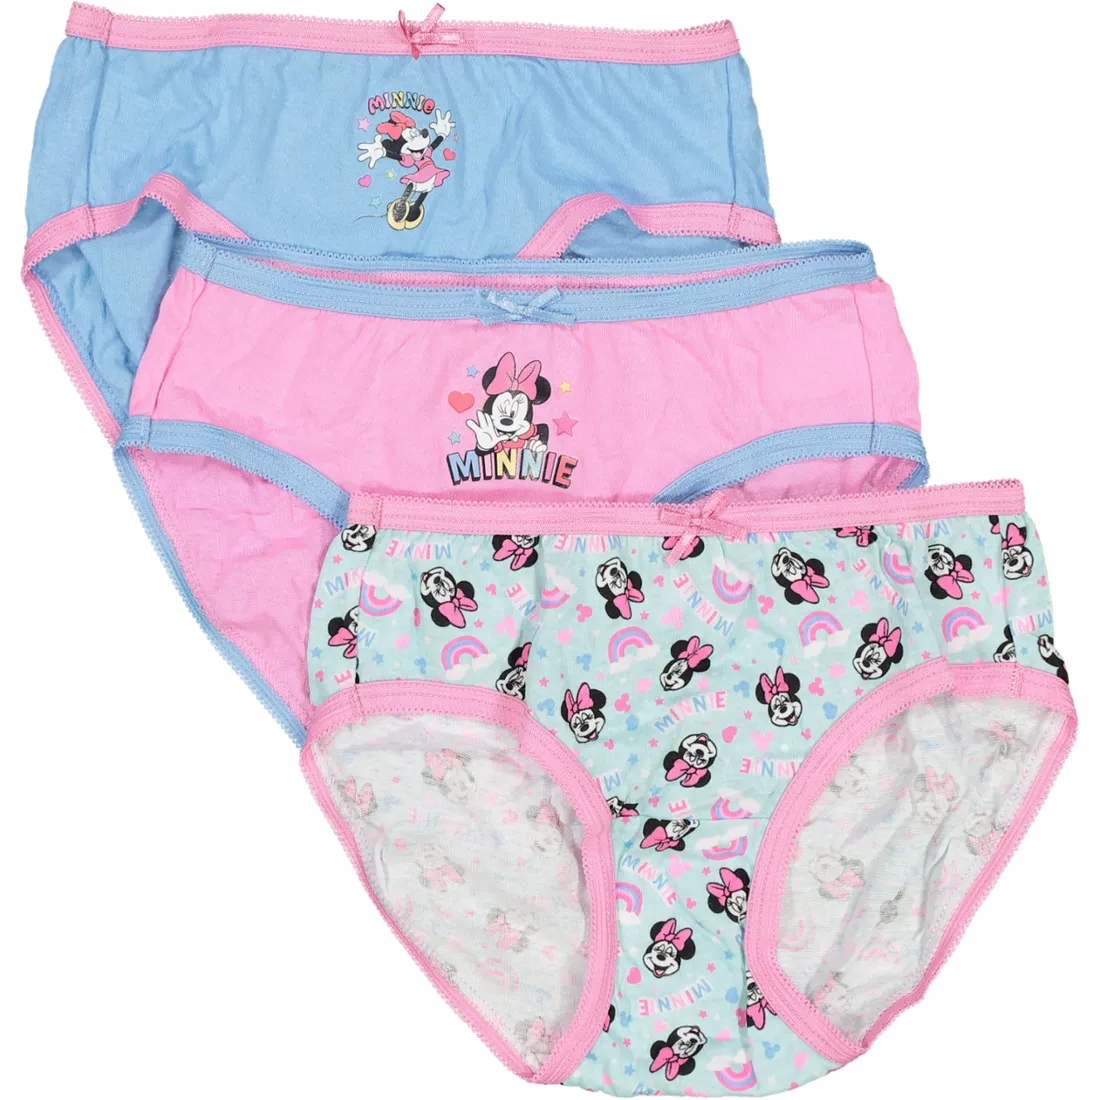 Disney Minnie Mouse 6pr 2T/3T Girls Panties 2 Packs of Three Red Black  White